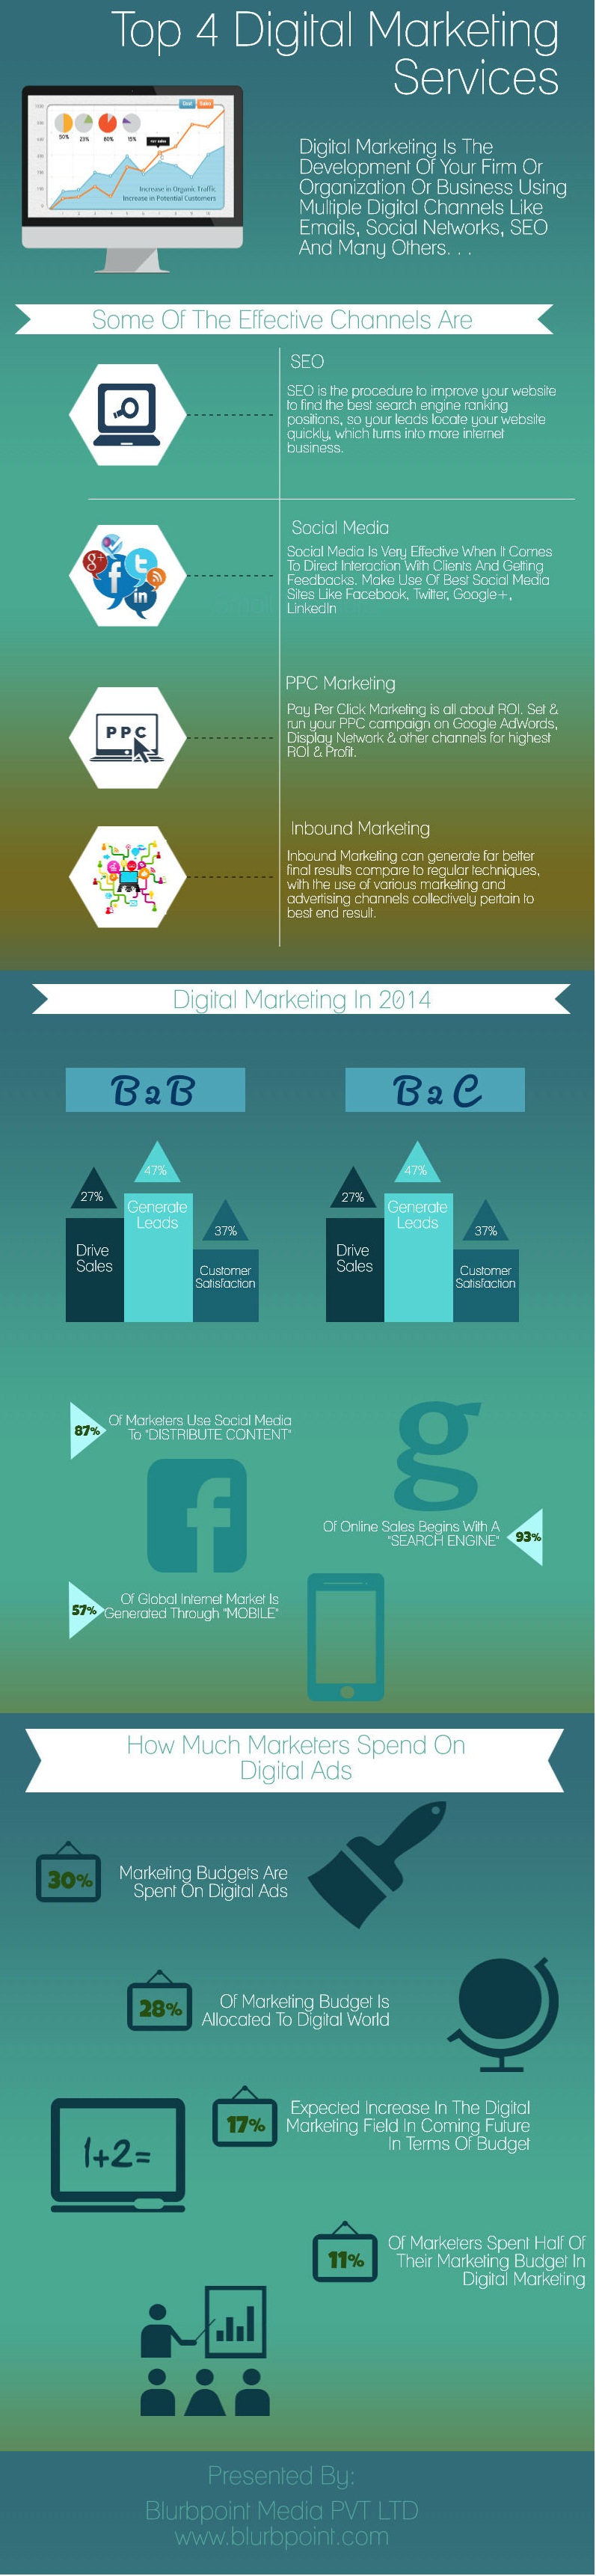 Top 4 Digital Marketing Services